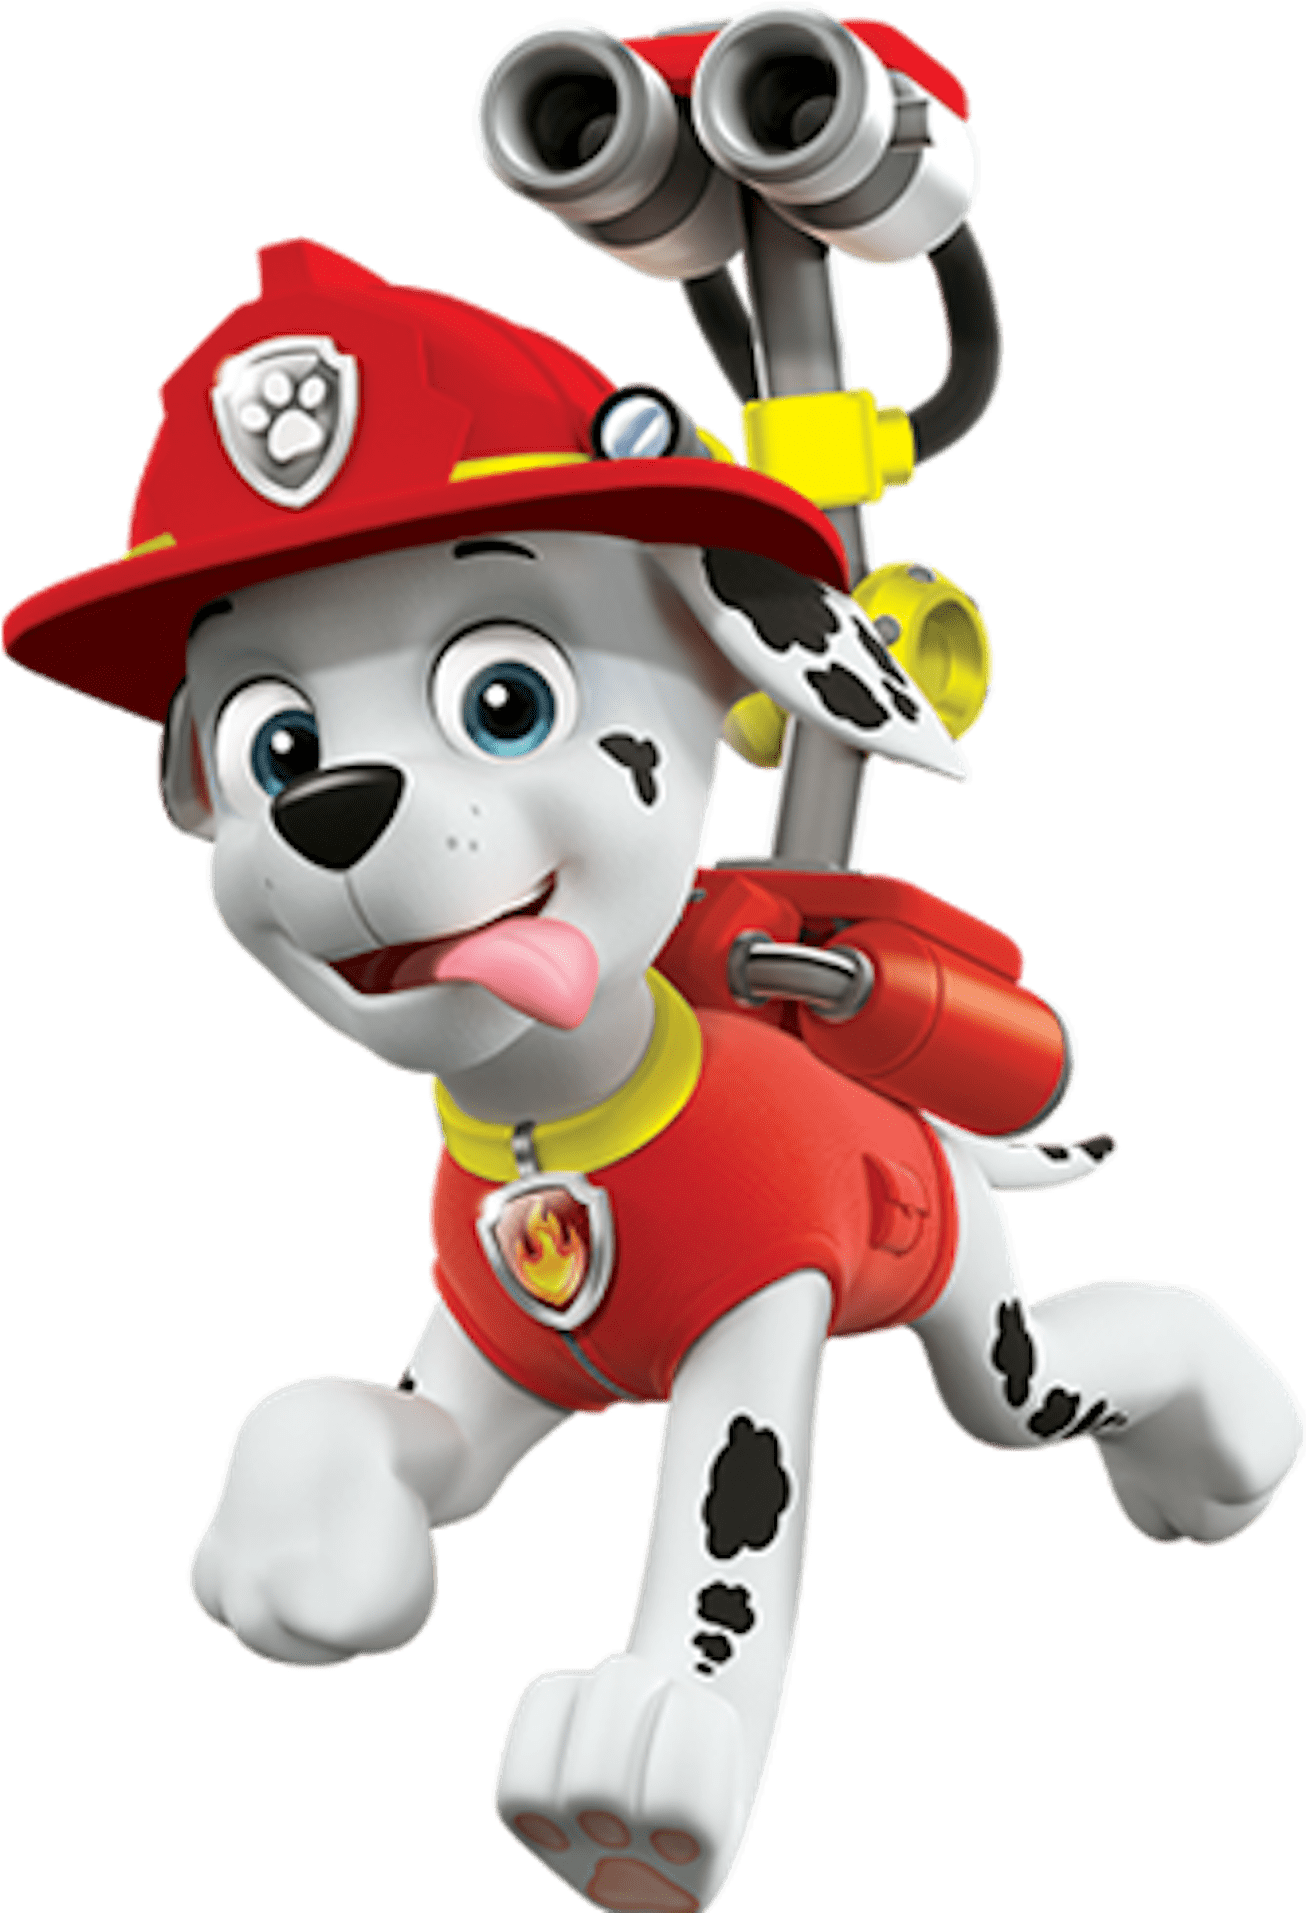 A Cartoon Dog Wearing A Firefighter Outfit